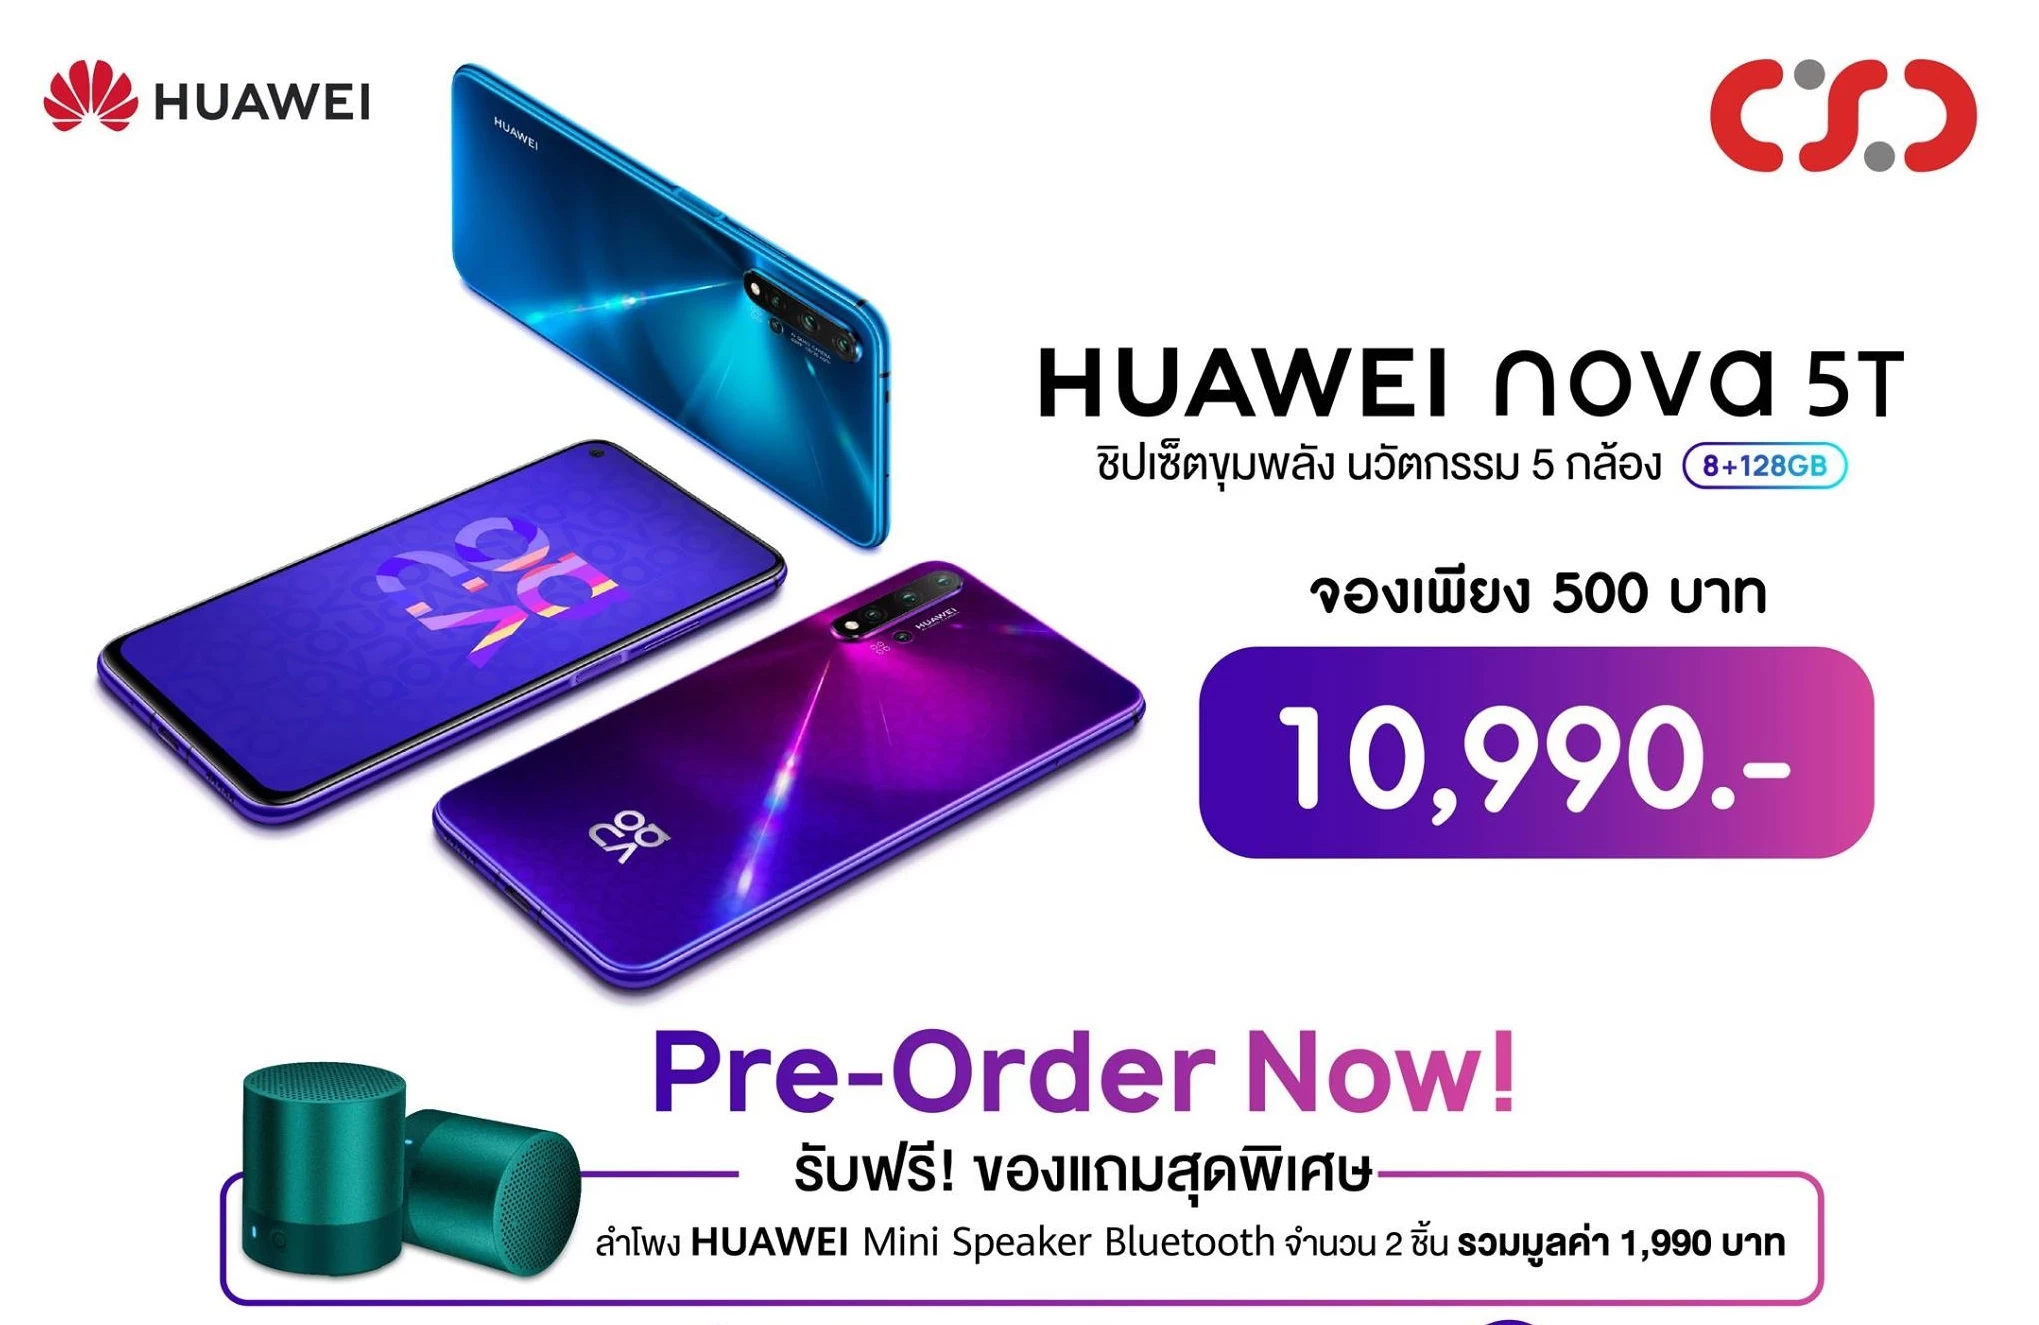 2019 09 05 1 | Huawei nova 5T | แนะนำโปรดีพรีออเดอร์สองรุ่นเด็ด Huawei nova 5T และ realme 5Pro ไปที่ CSC และ IT CITY โปรดีเหนือใคร